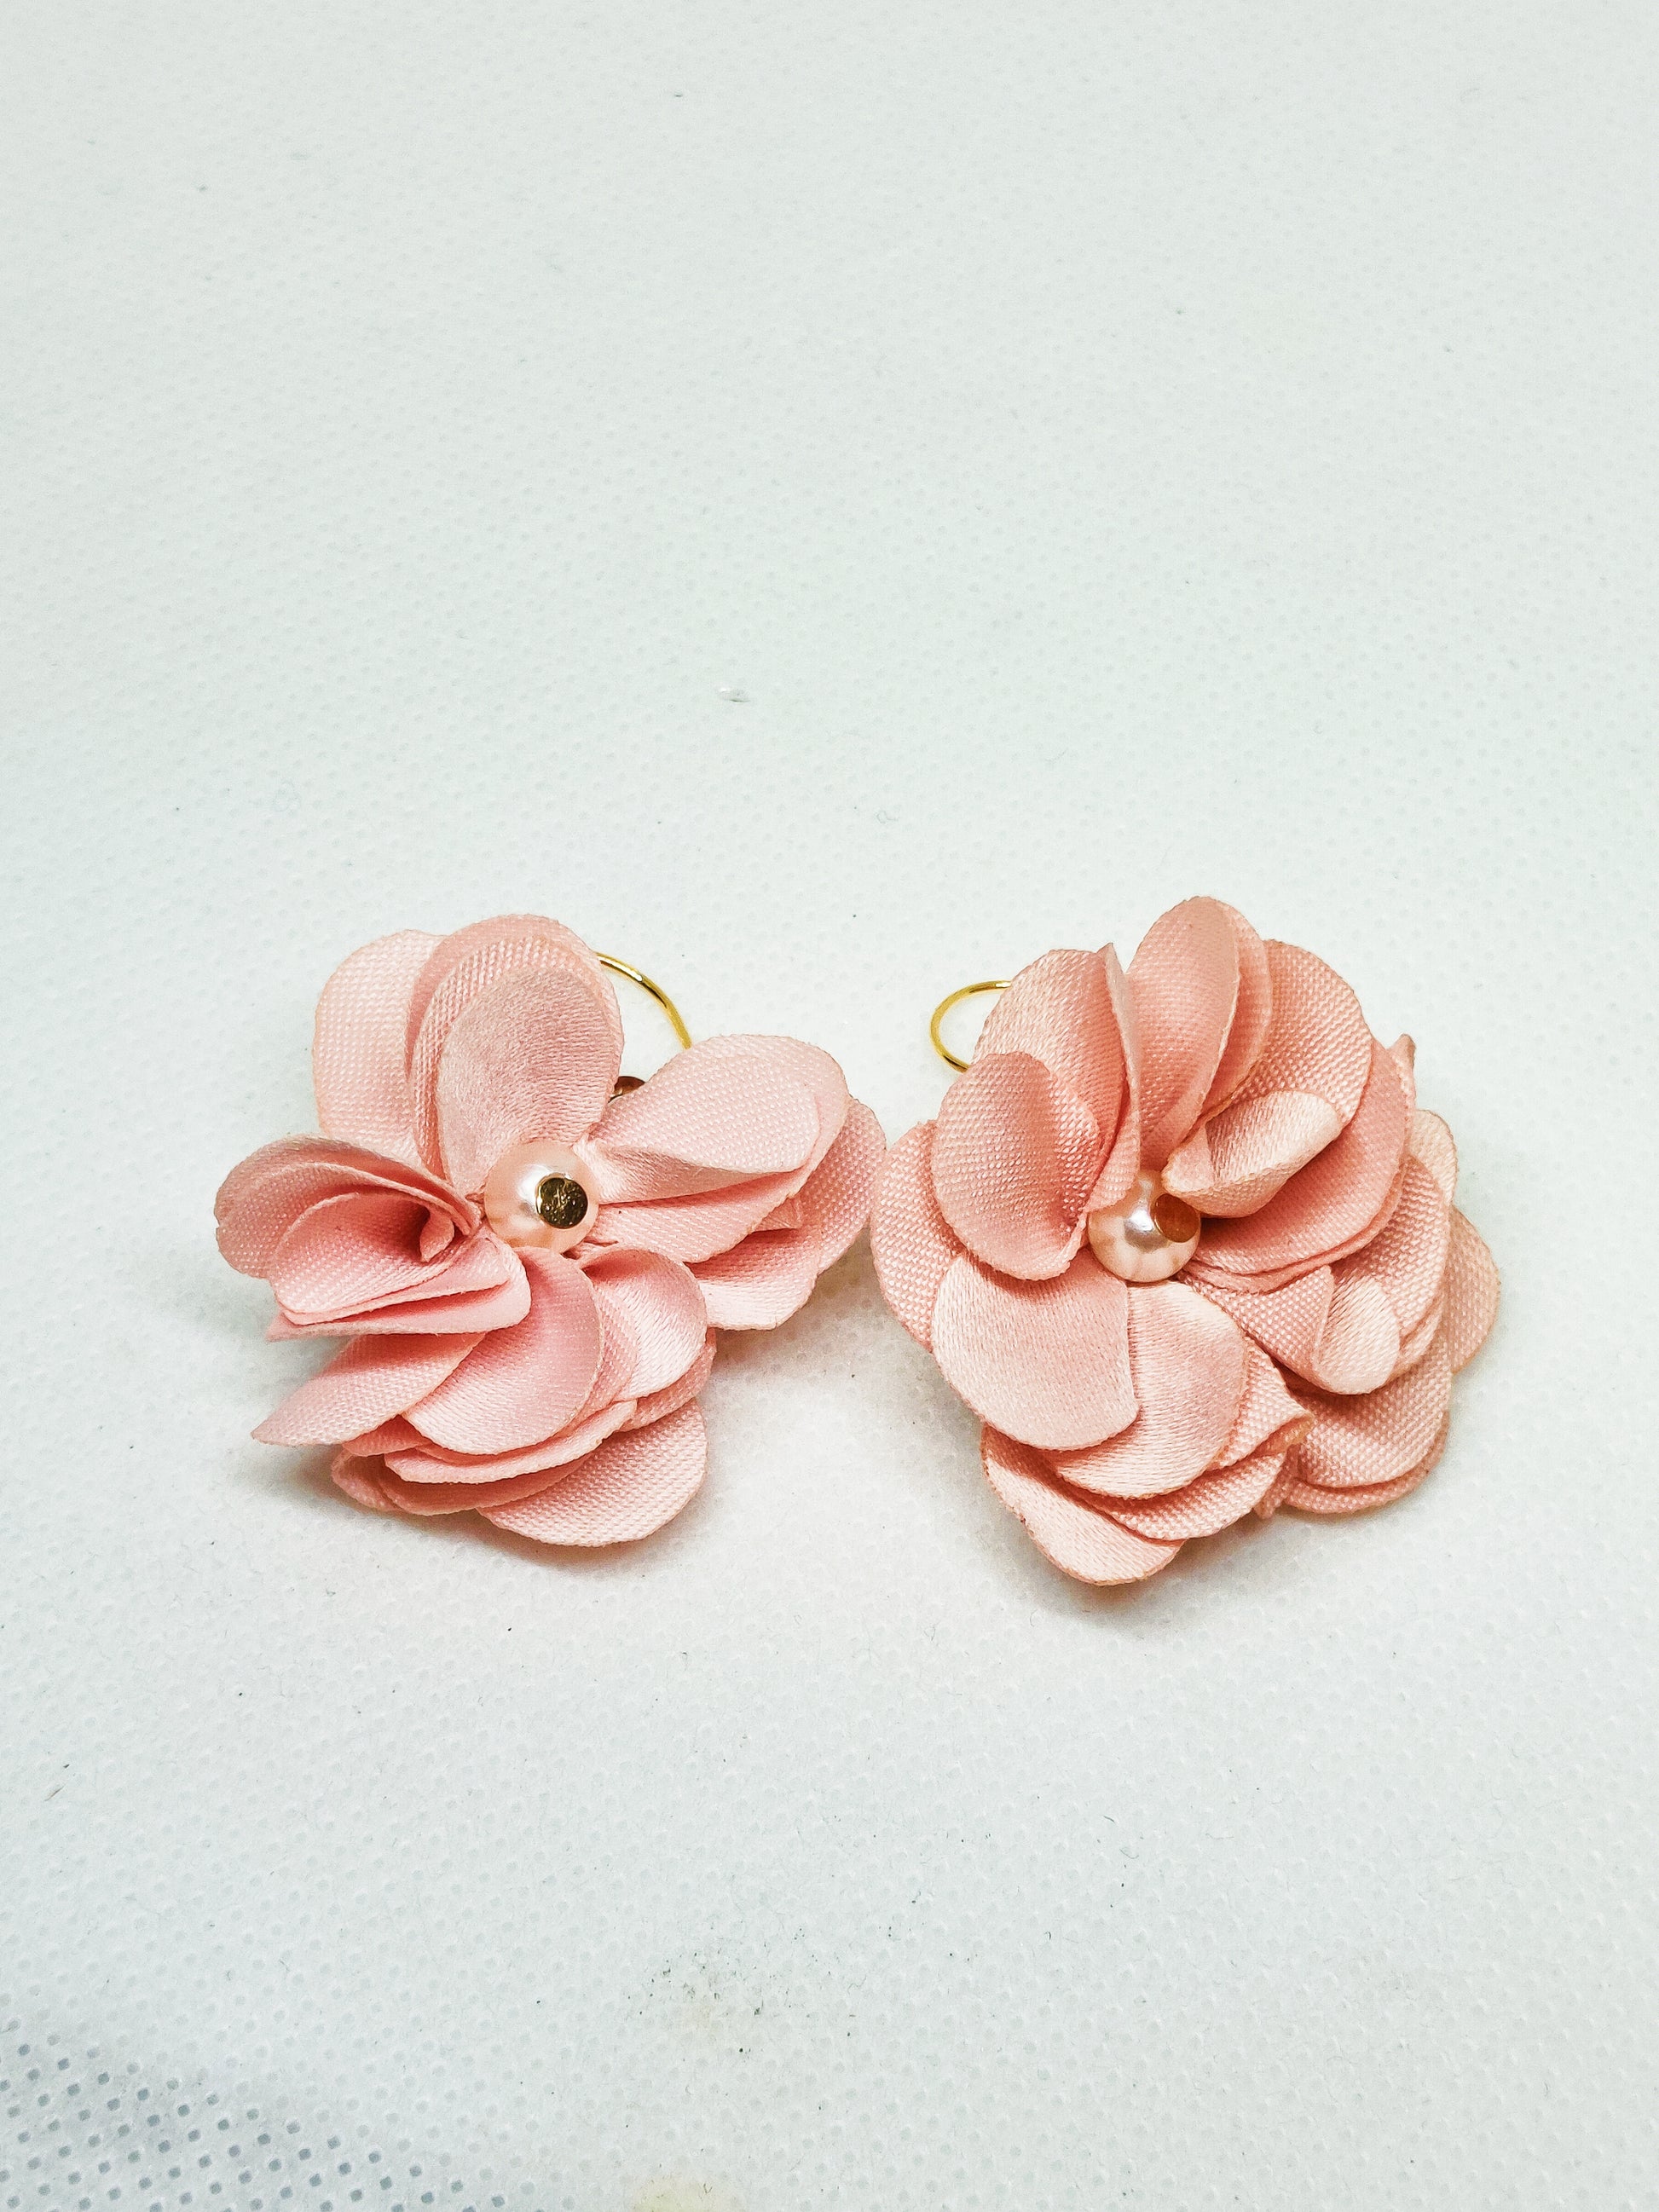 Flores rosa nude con perla central